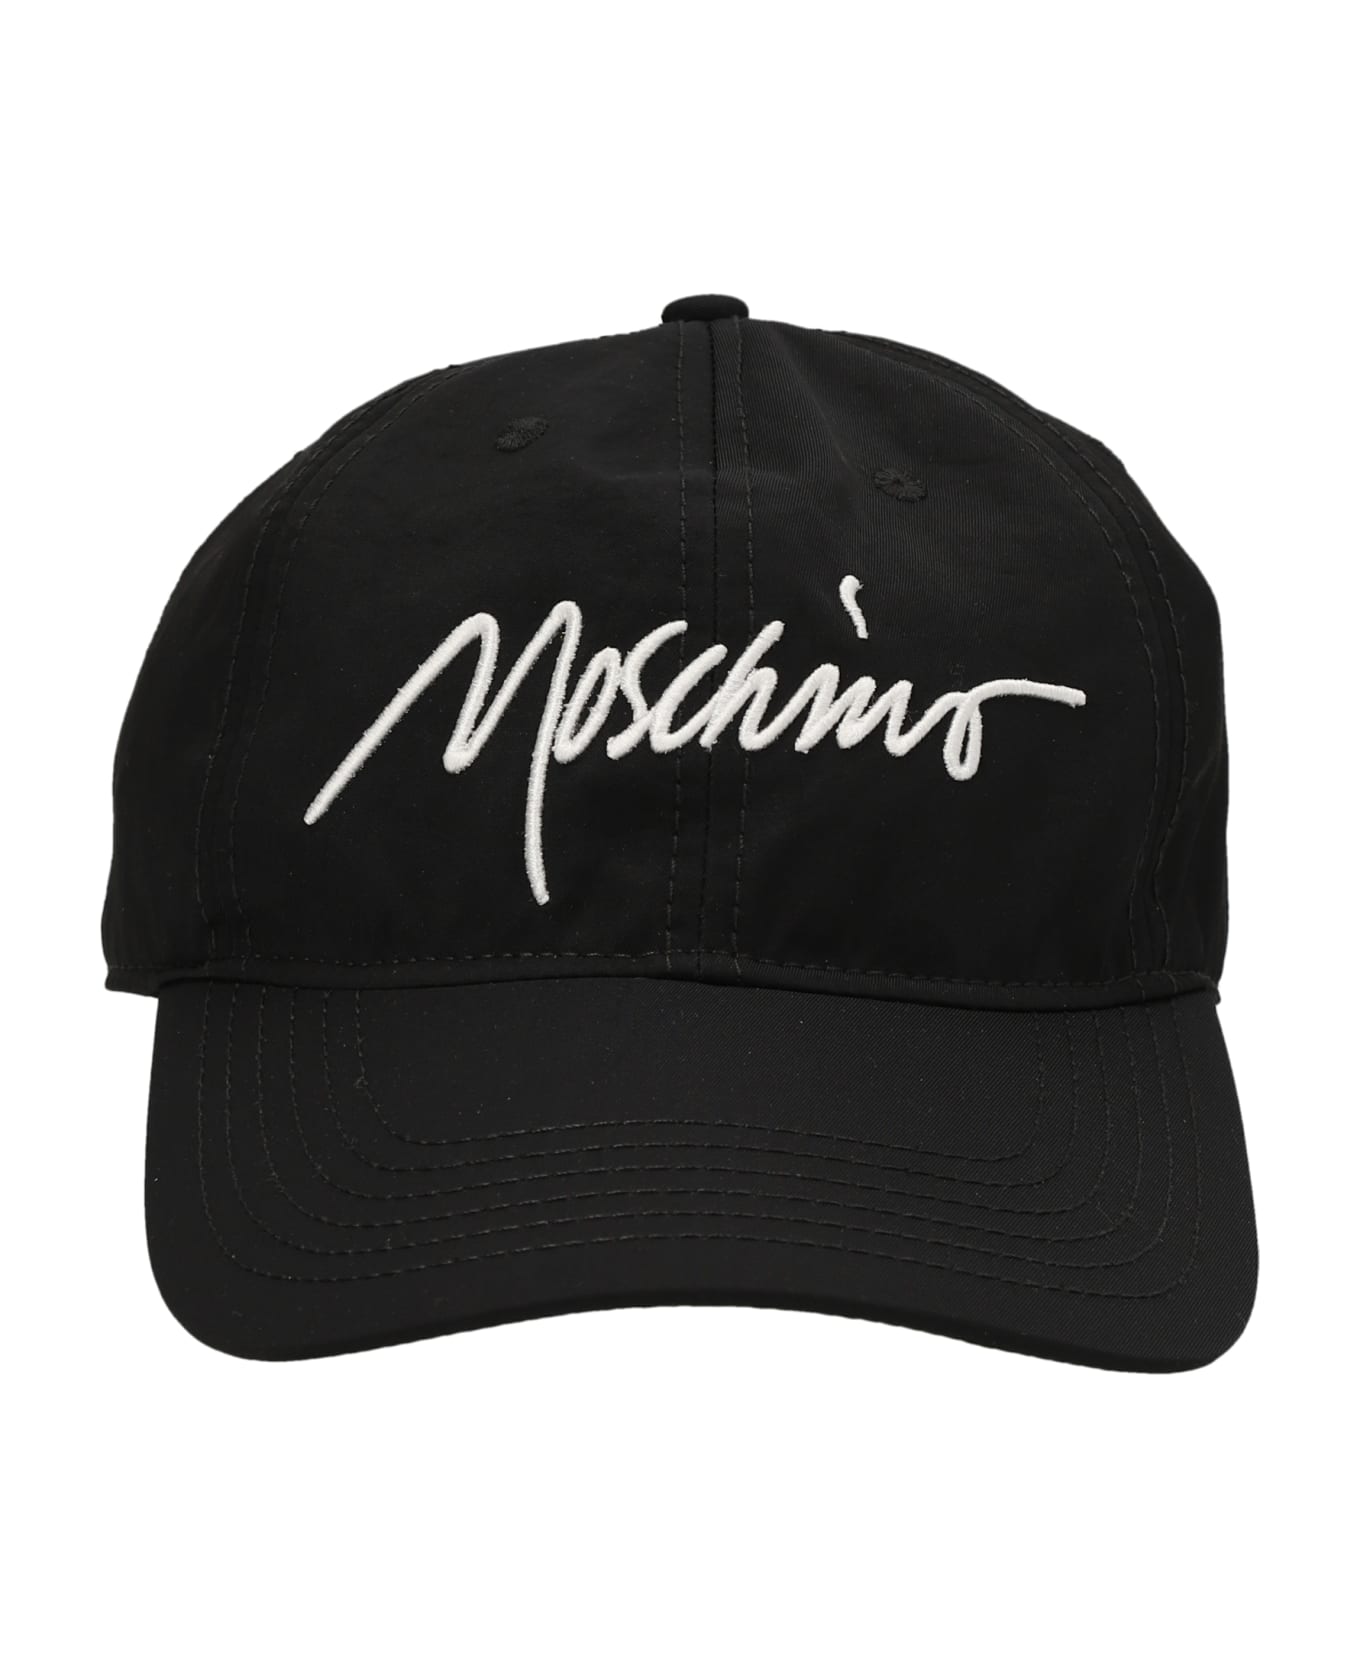 Moschino Logo Embroidery Cap - Black  